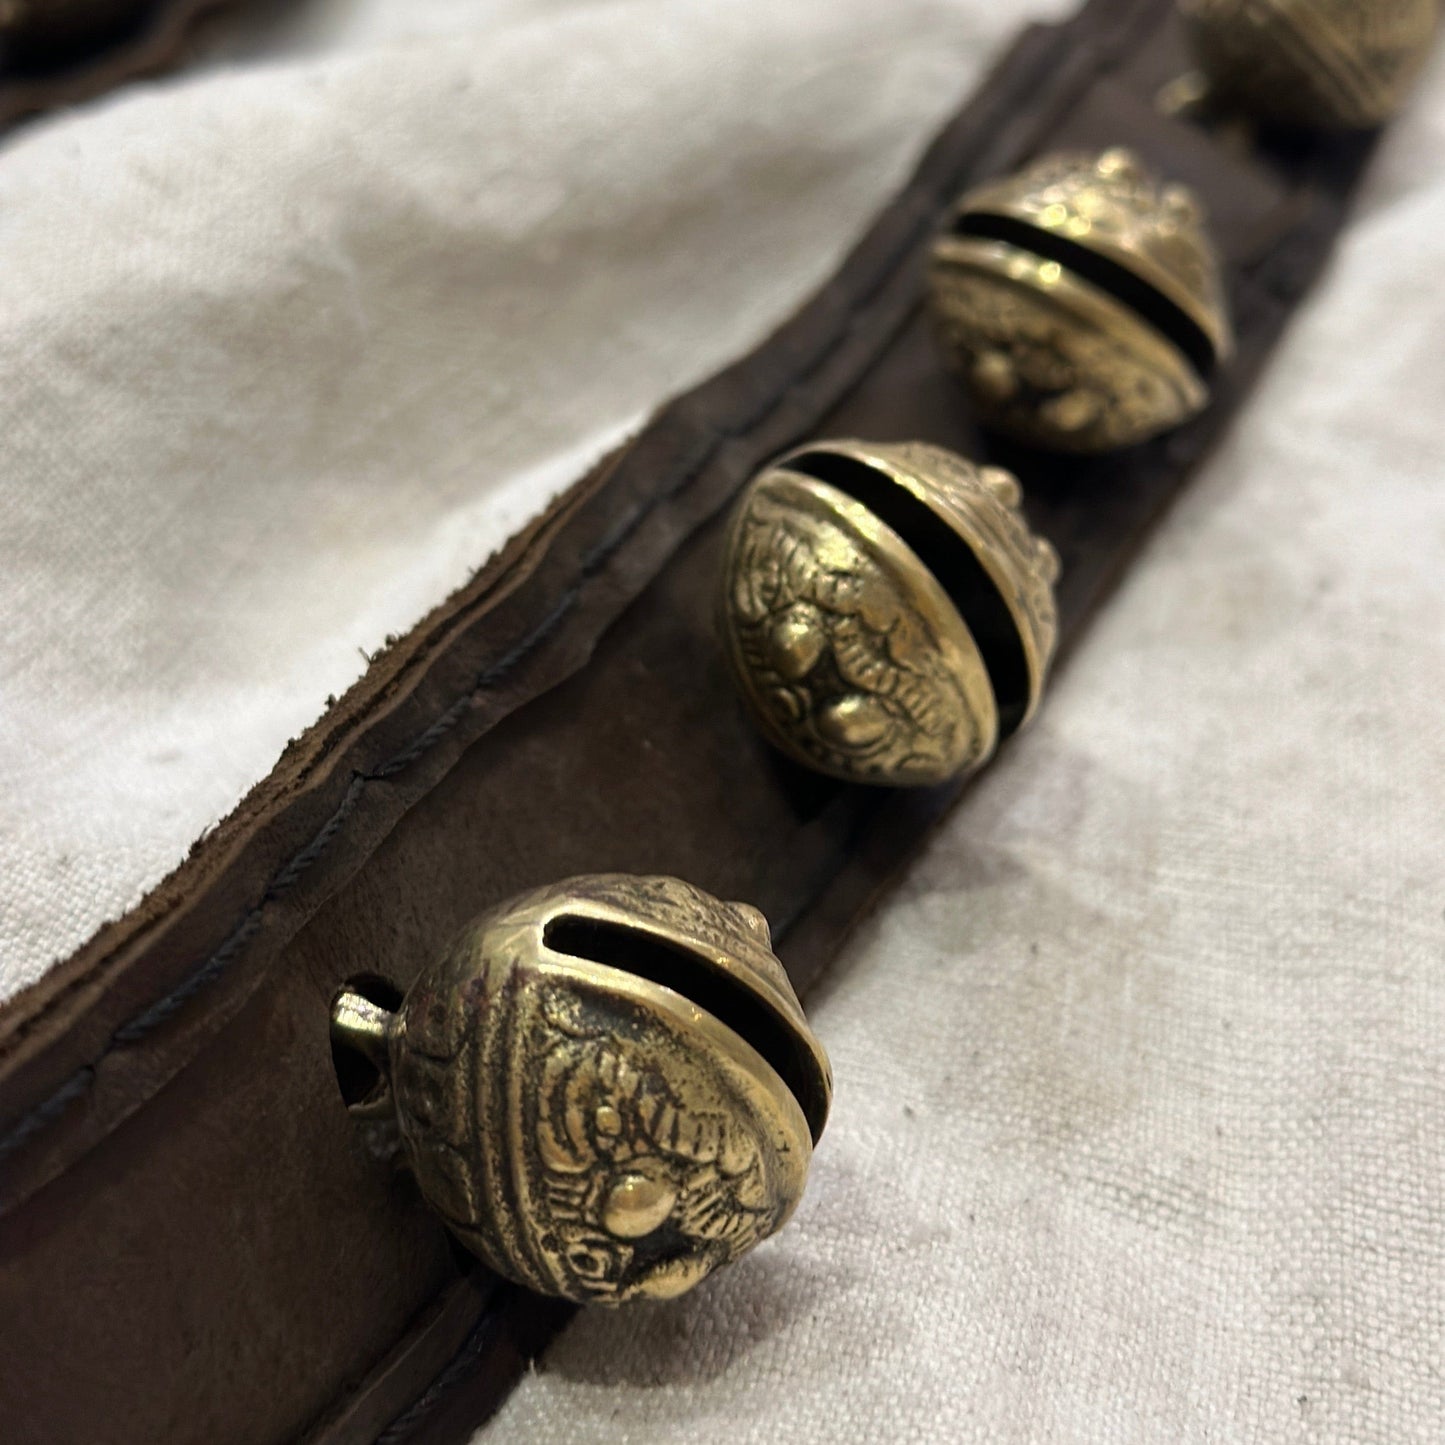 Indianalia Tibetan Yak Neck Bells on a Leather Strap 21526